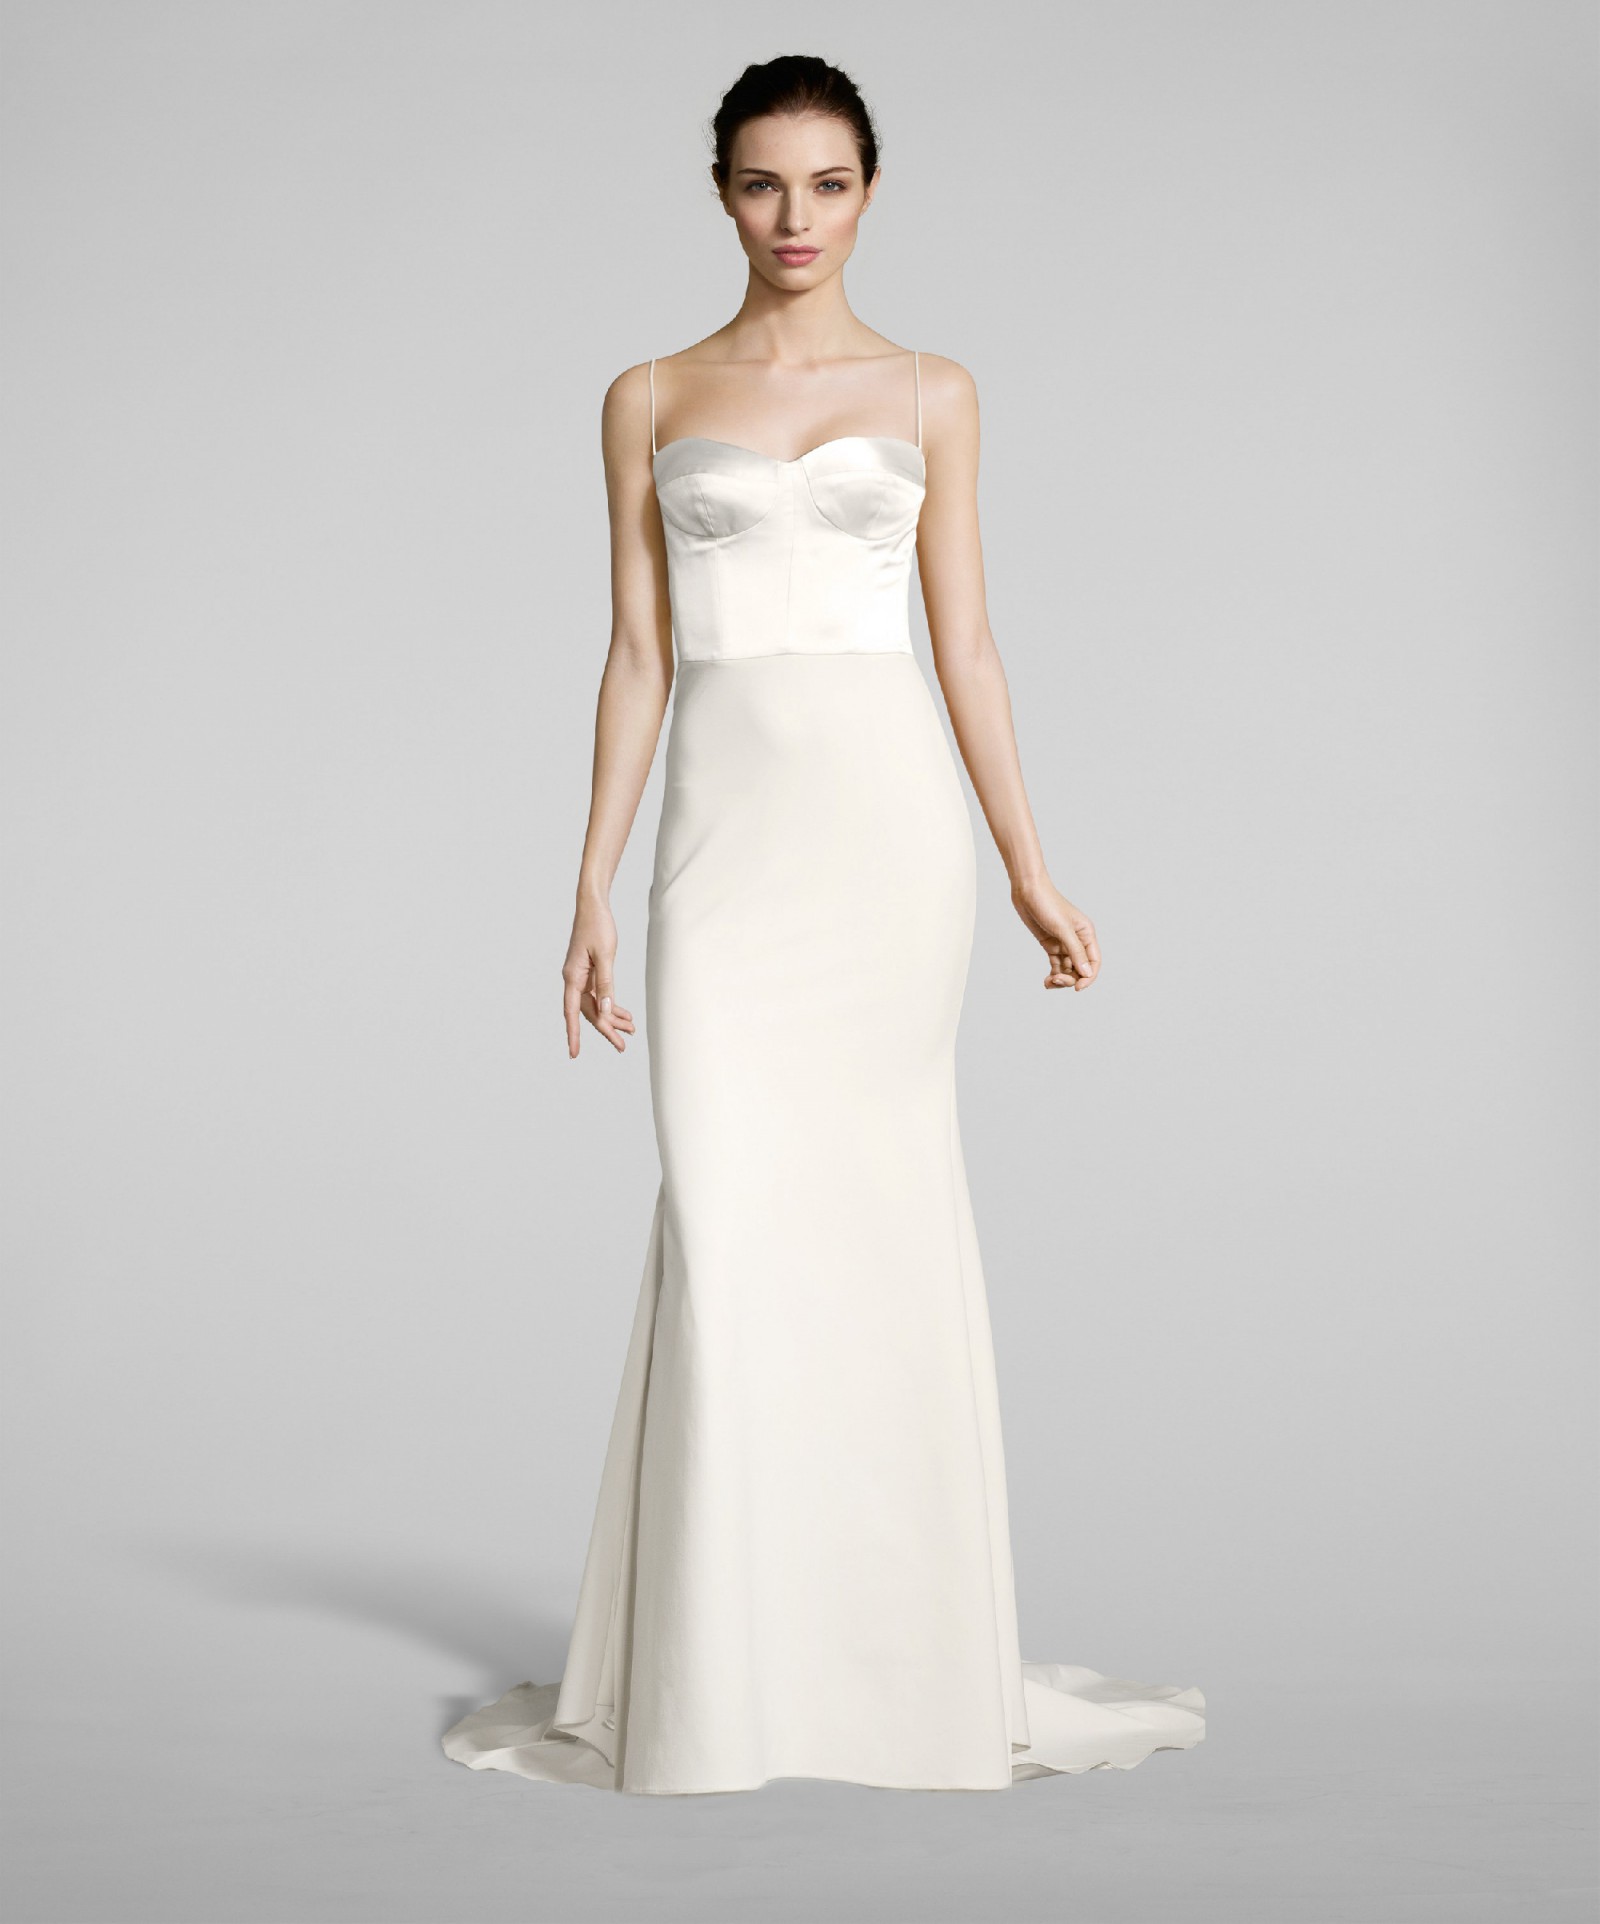 Louvienne Tavi New Wedding Dress Save 40% - Stillwhite